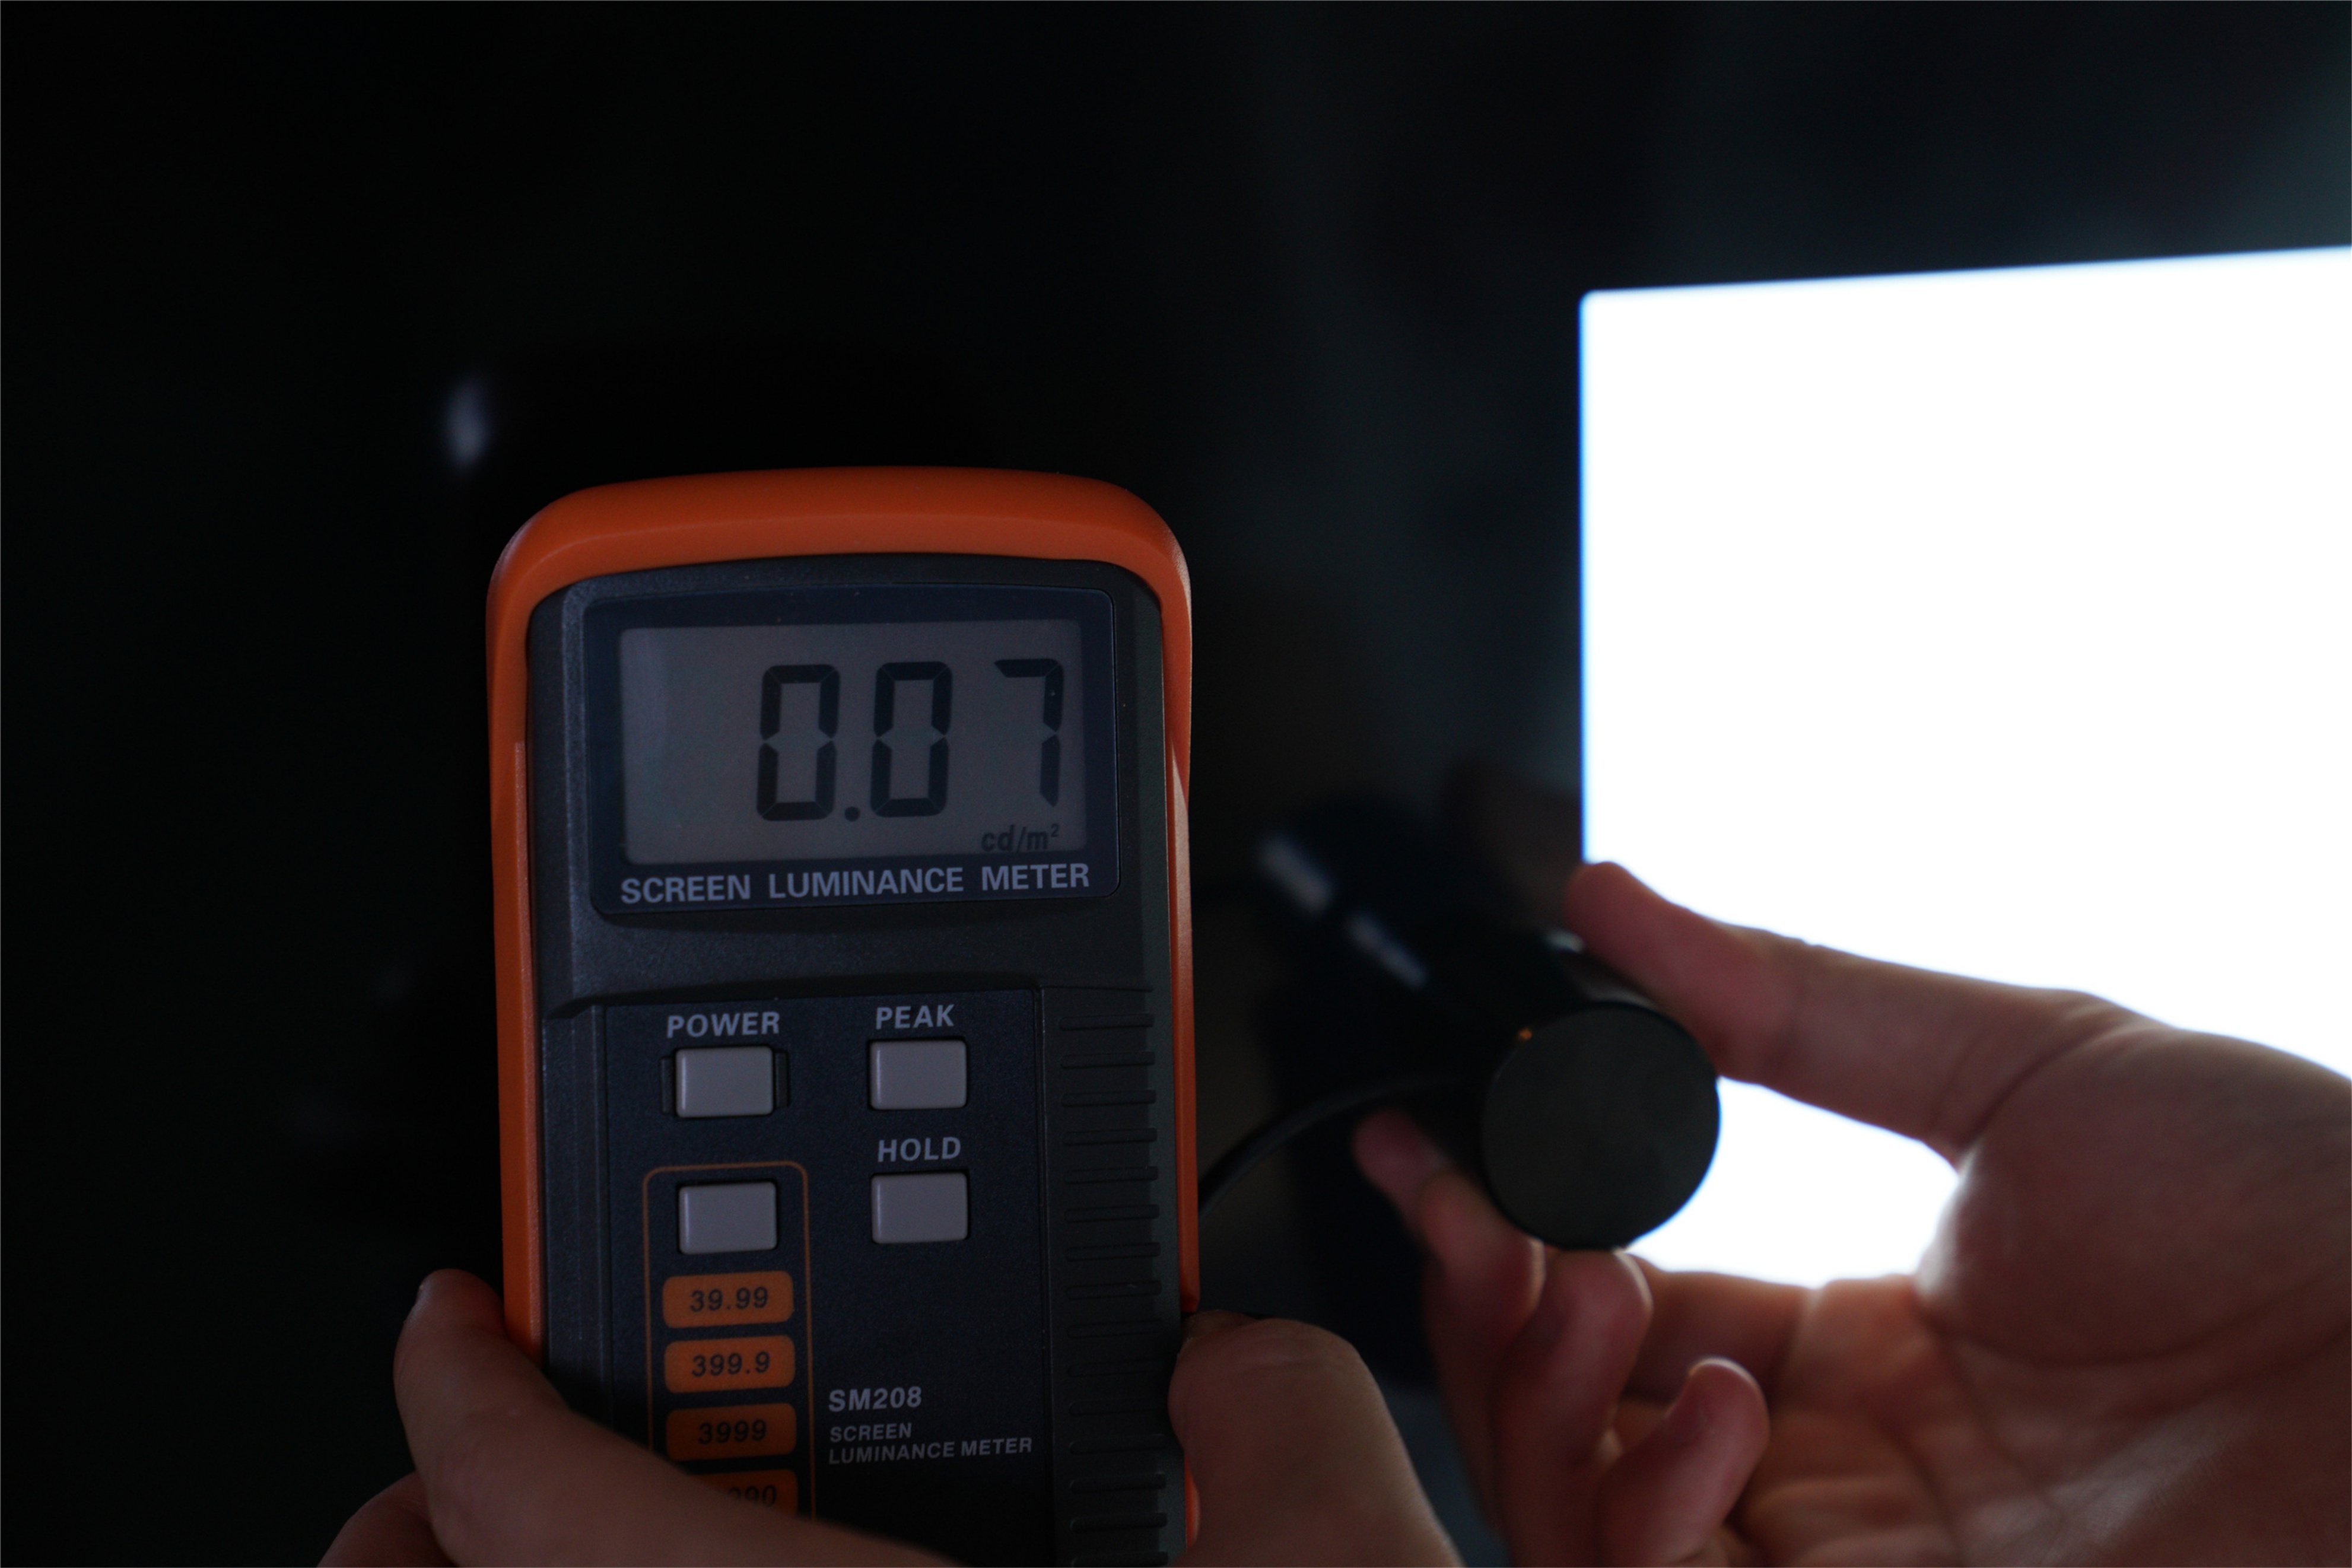 TCL Q10G Mini LED电视测评：画质拉满，价格王炸